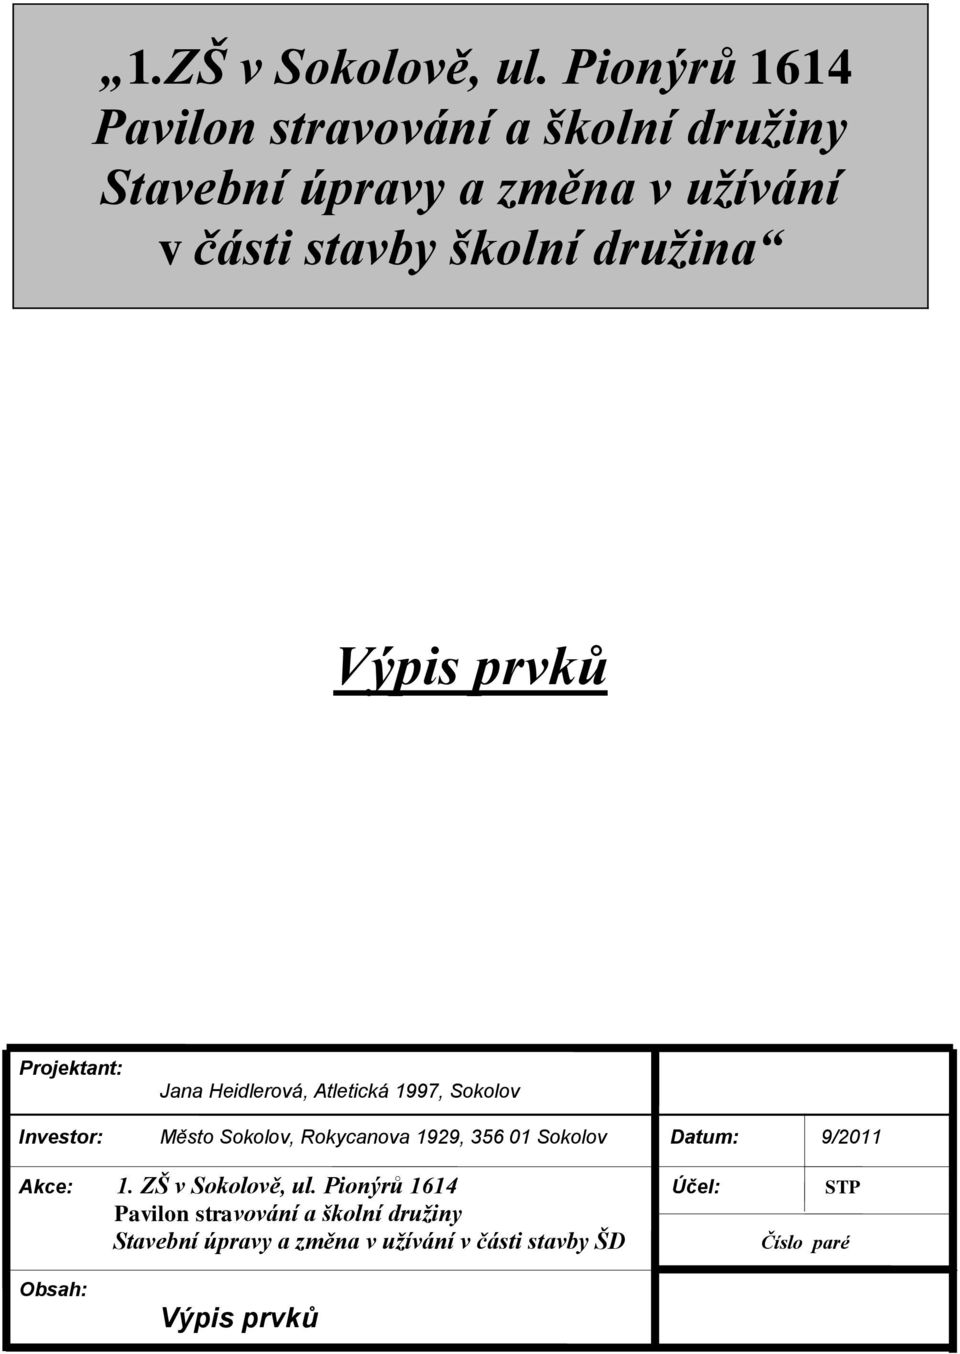 družina Výpis prvků Projektant: Jana Heidlerová, Atletická 1997, Sokolov Investor: Město Sokolov, Rokycanova